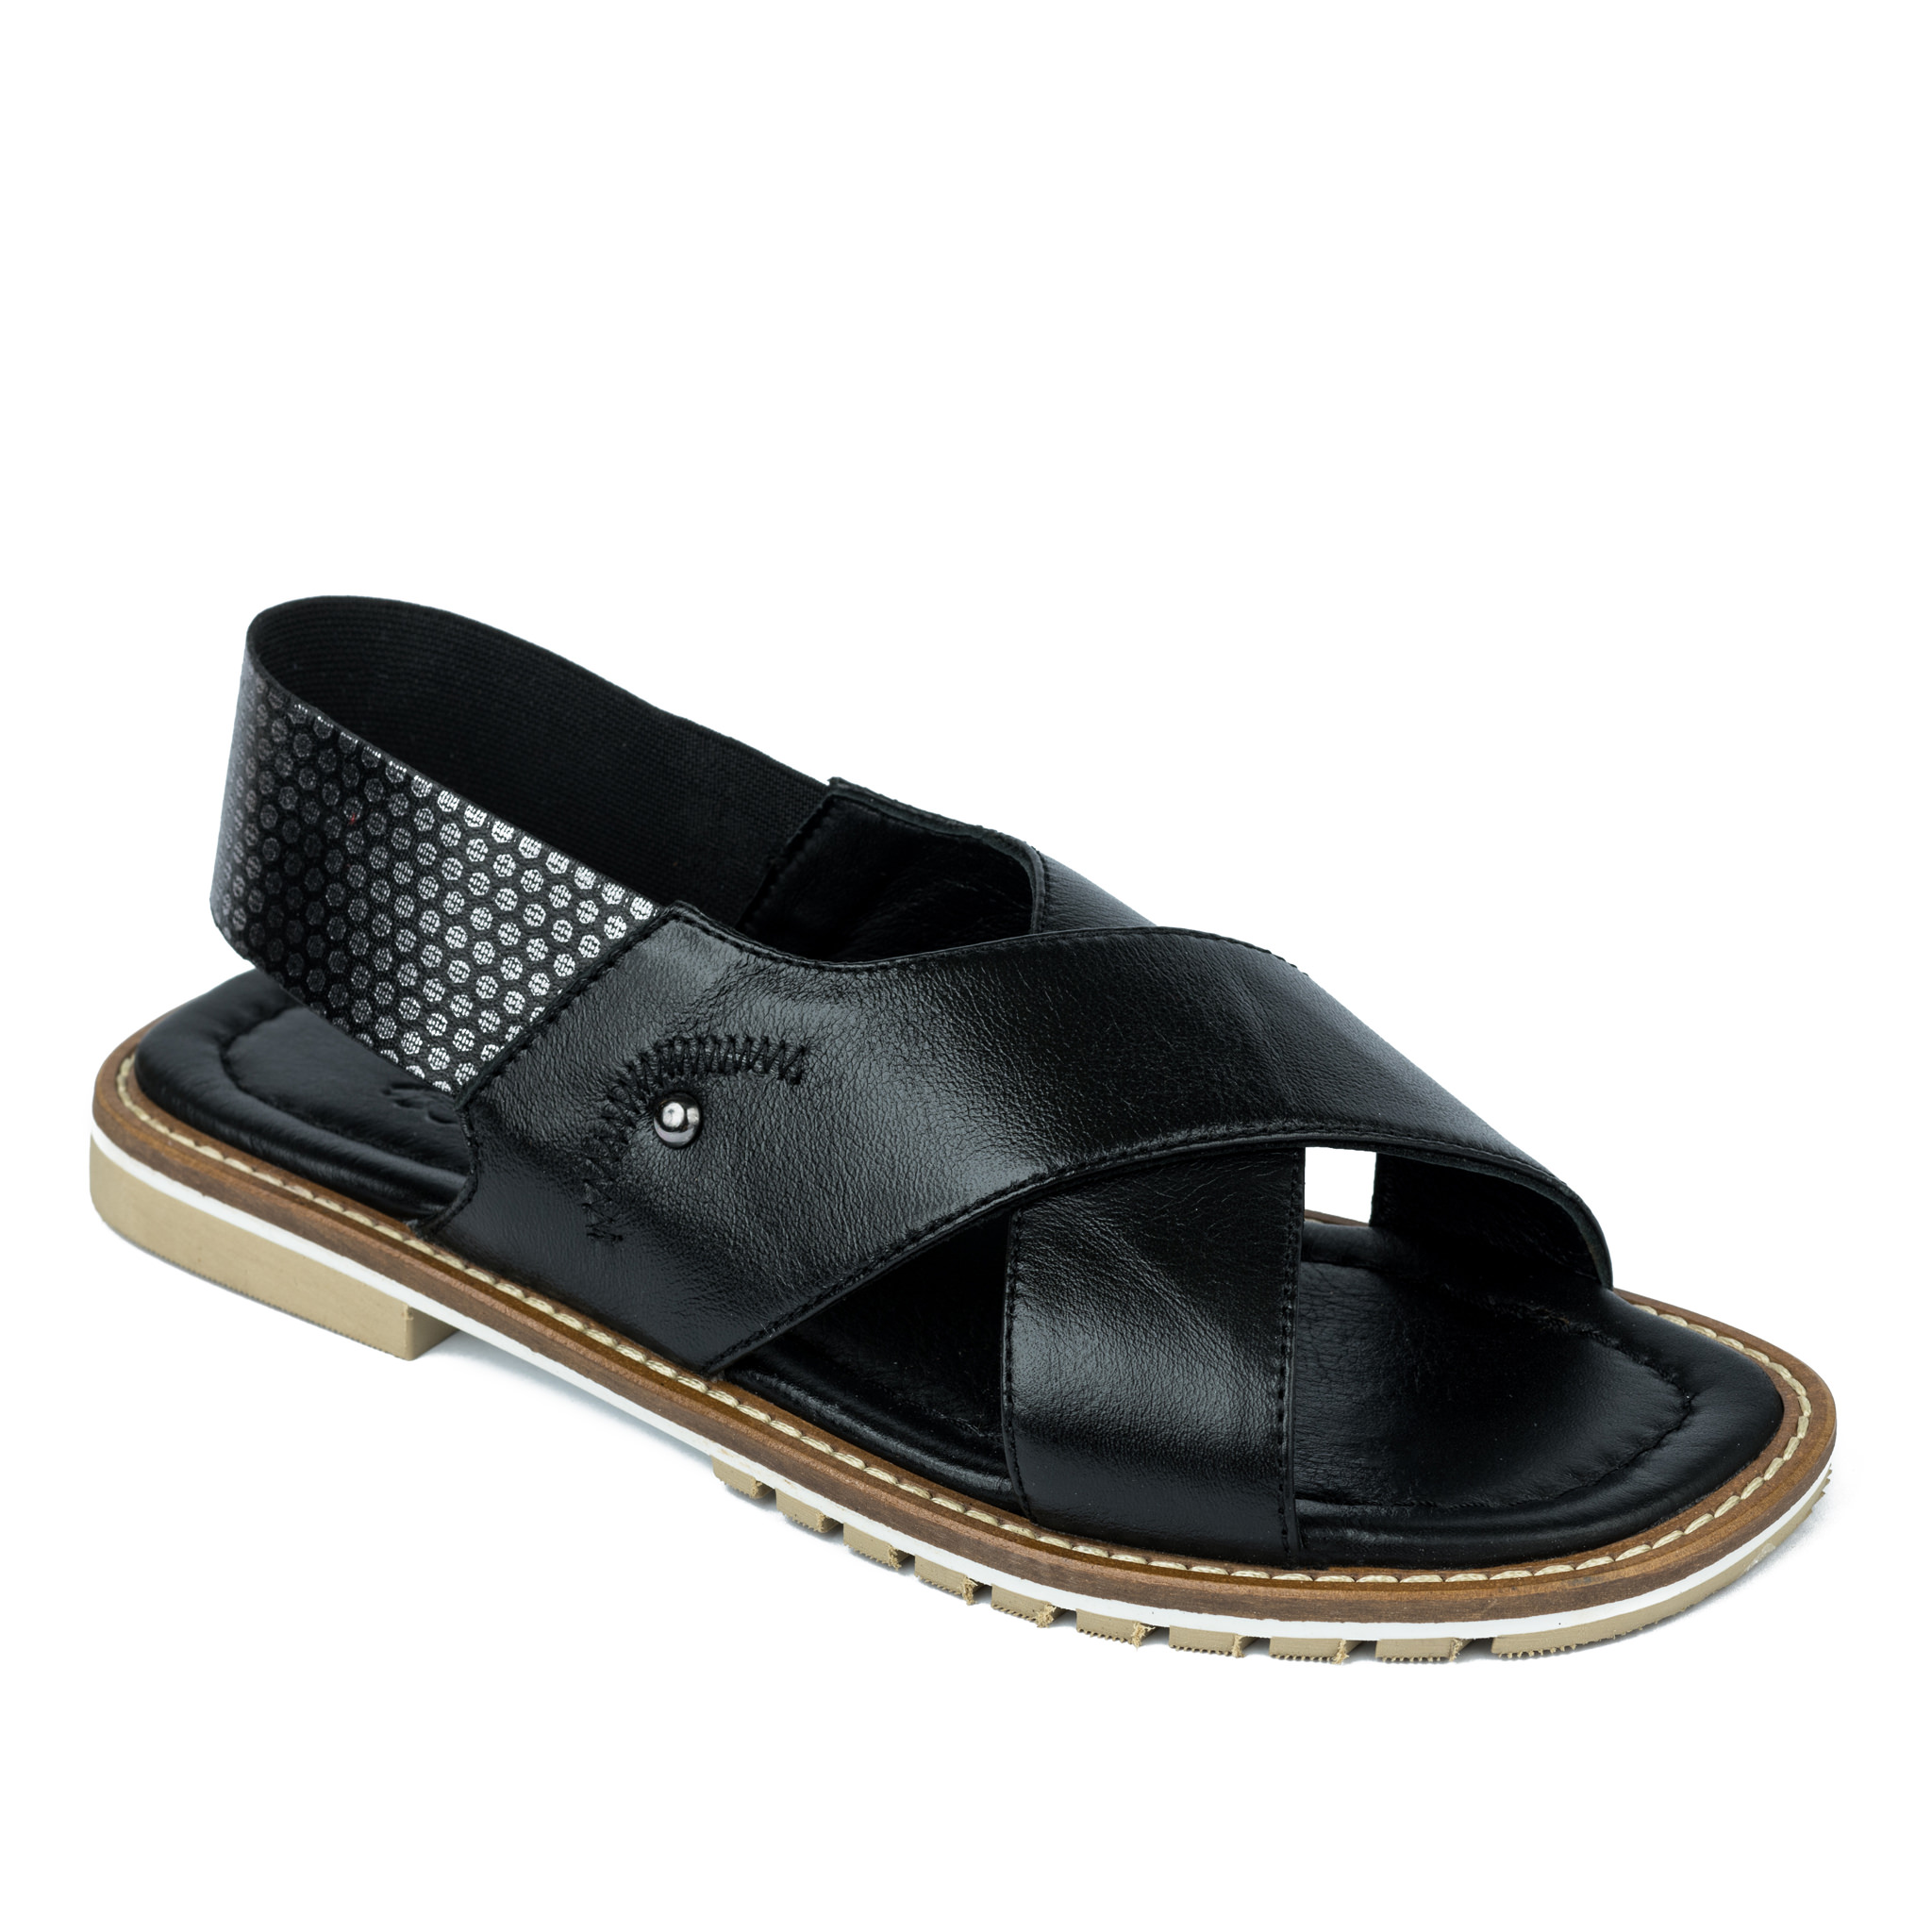 Women sandals A197 - BLACK